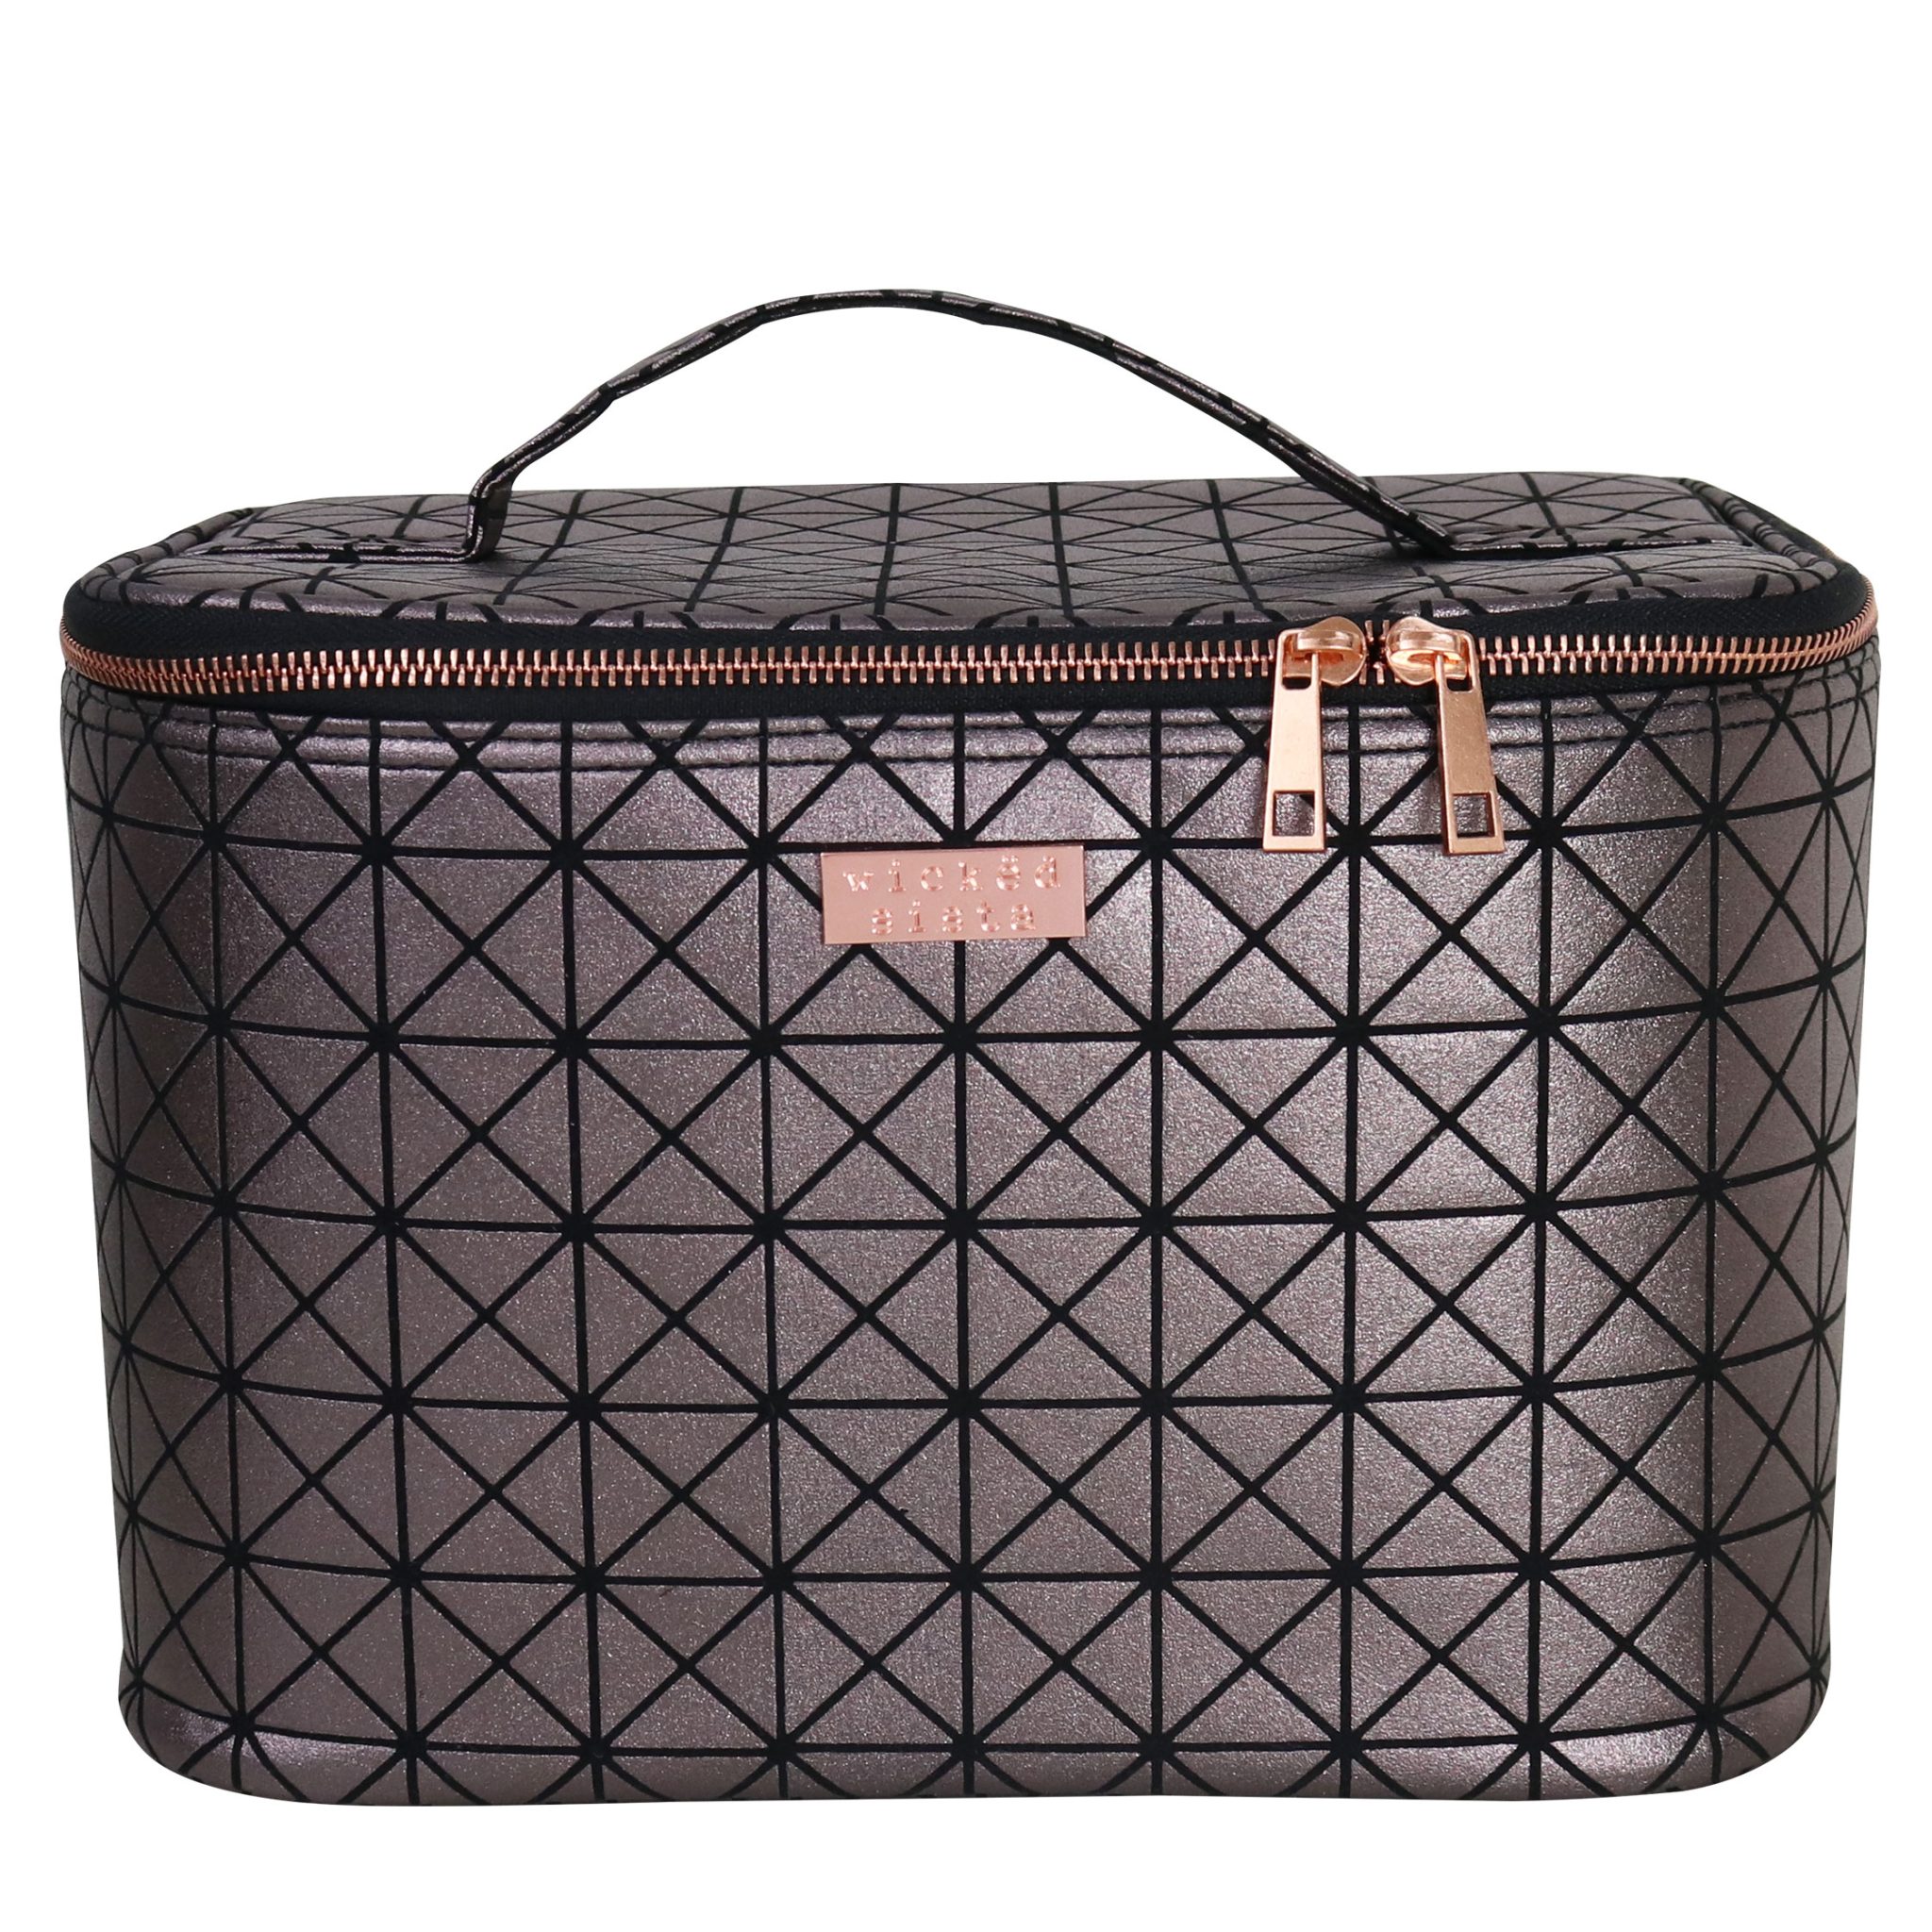 Metallic geometric large beauty case - Wicked Sista | Cosmetic Bags ...